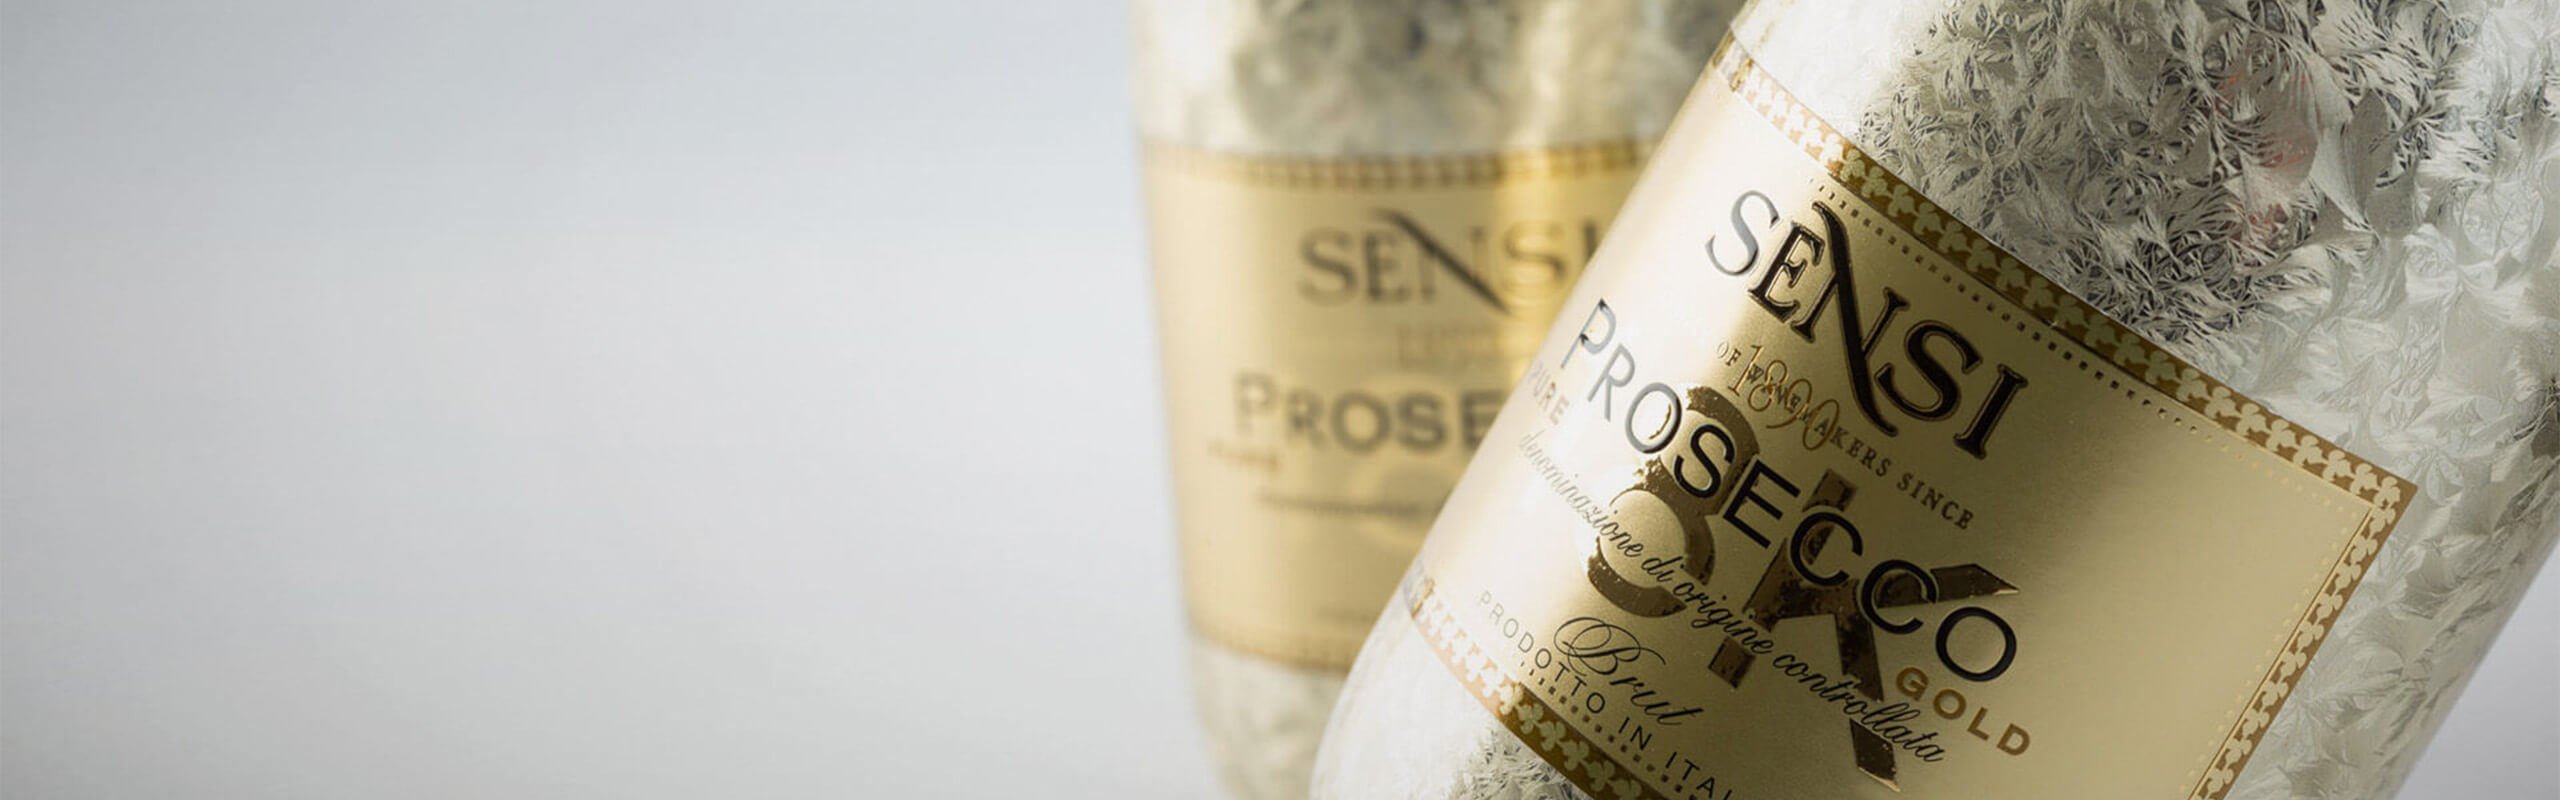 Sensi 18K Luxury sparkling wines